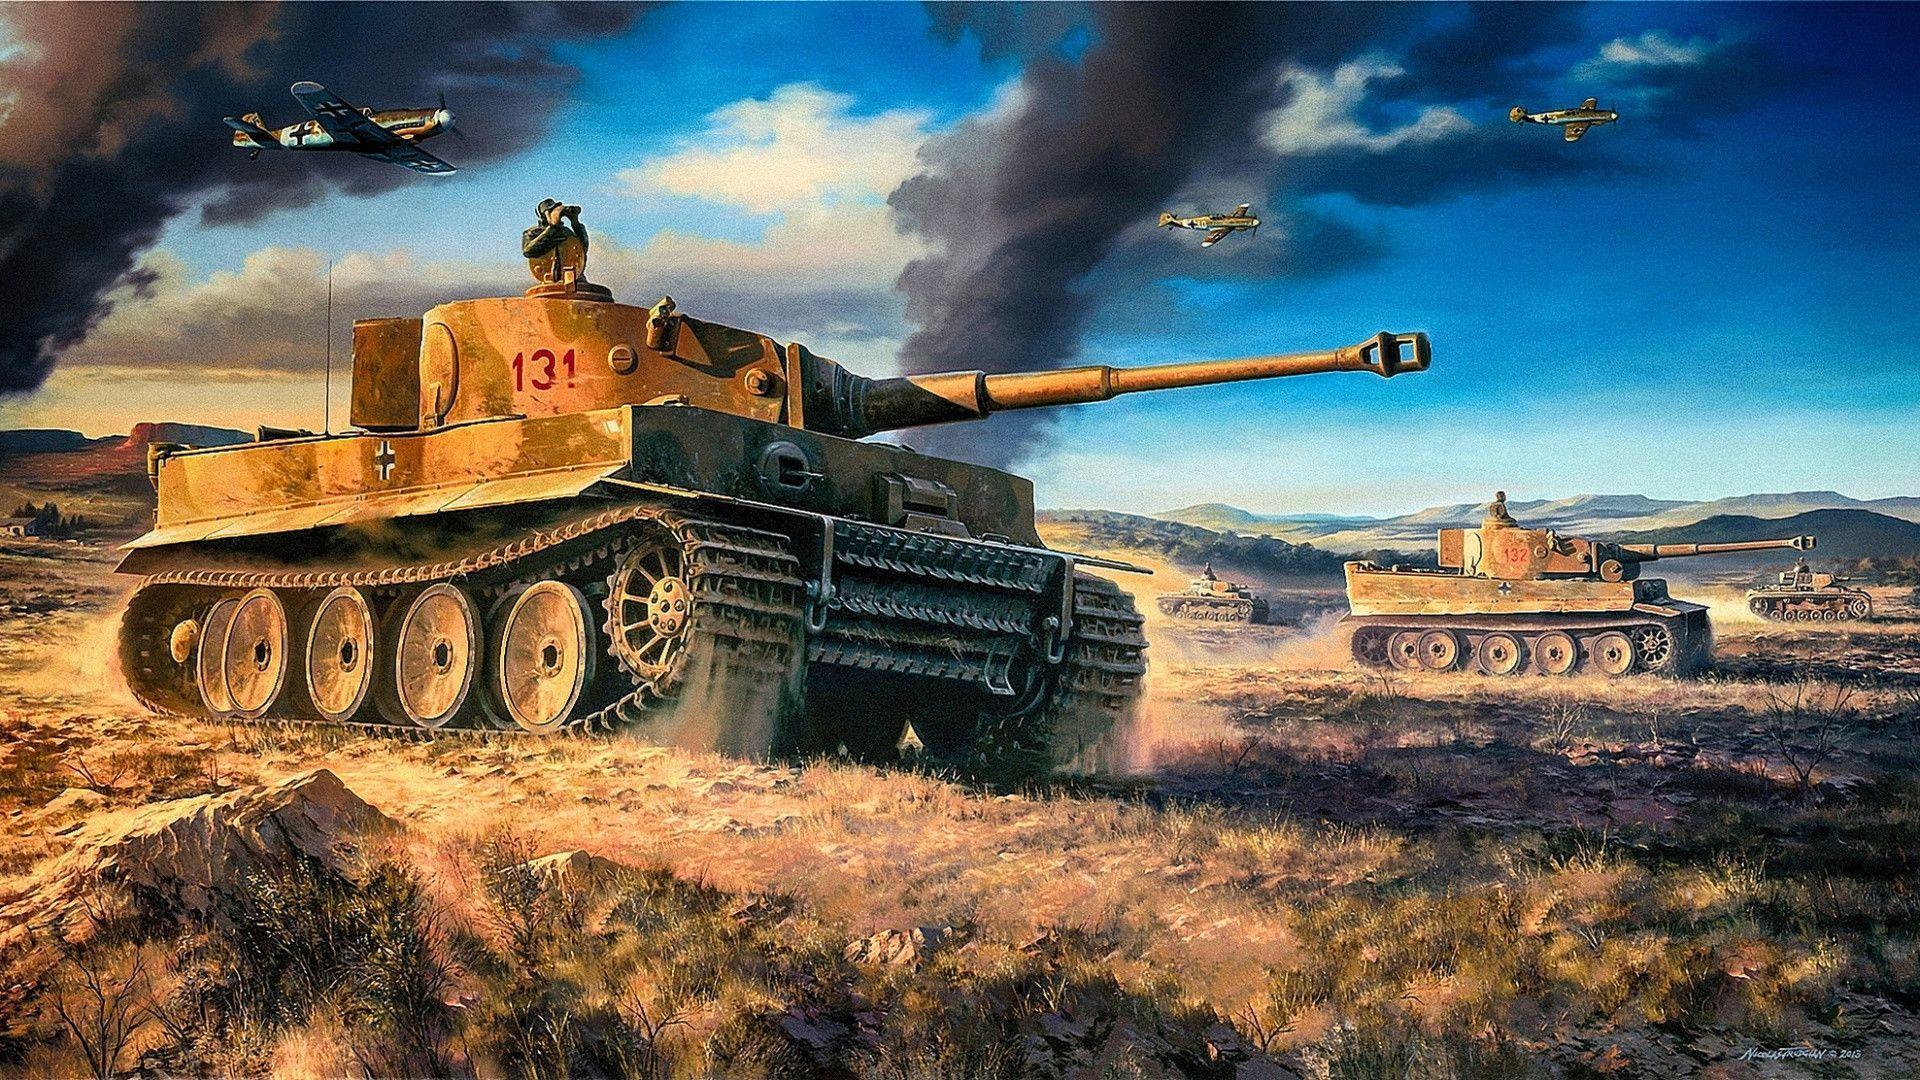 World Of Tanks Wallpaper 2560x1440 66091 - Baltana